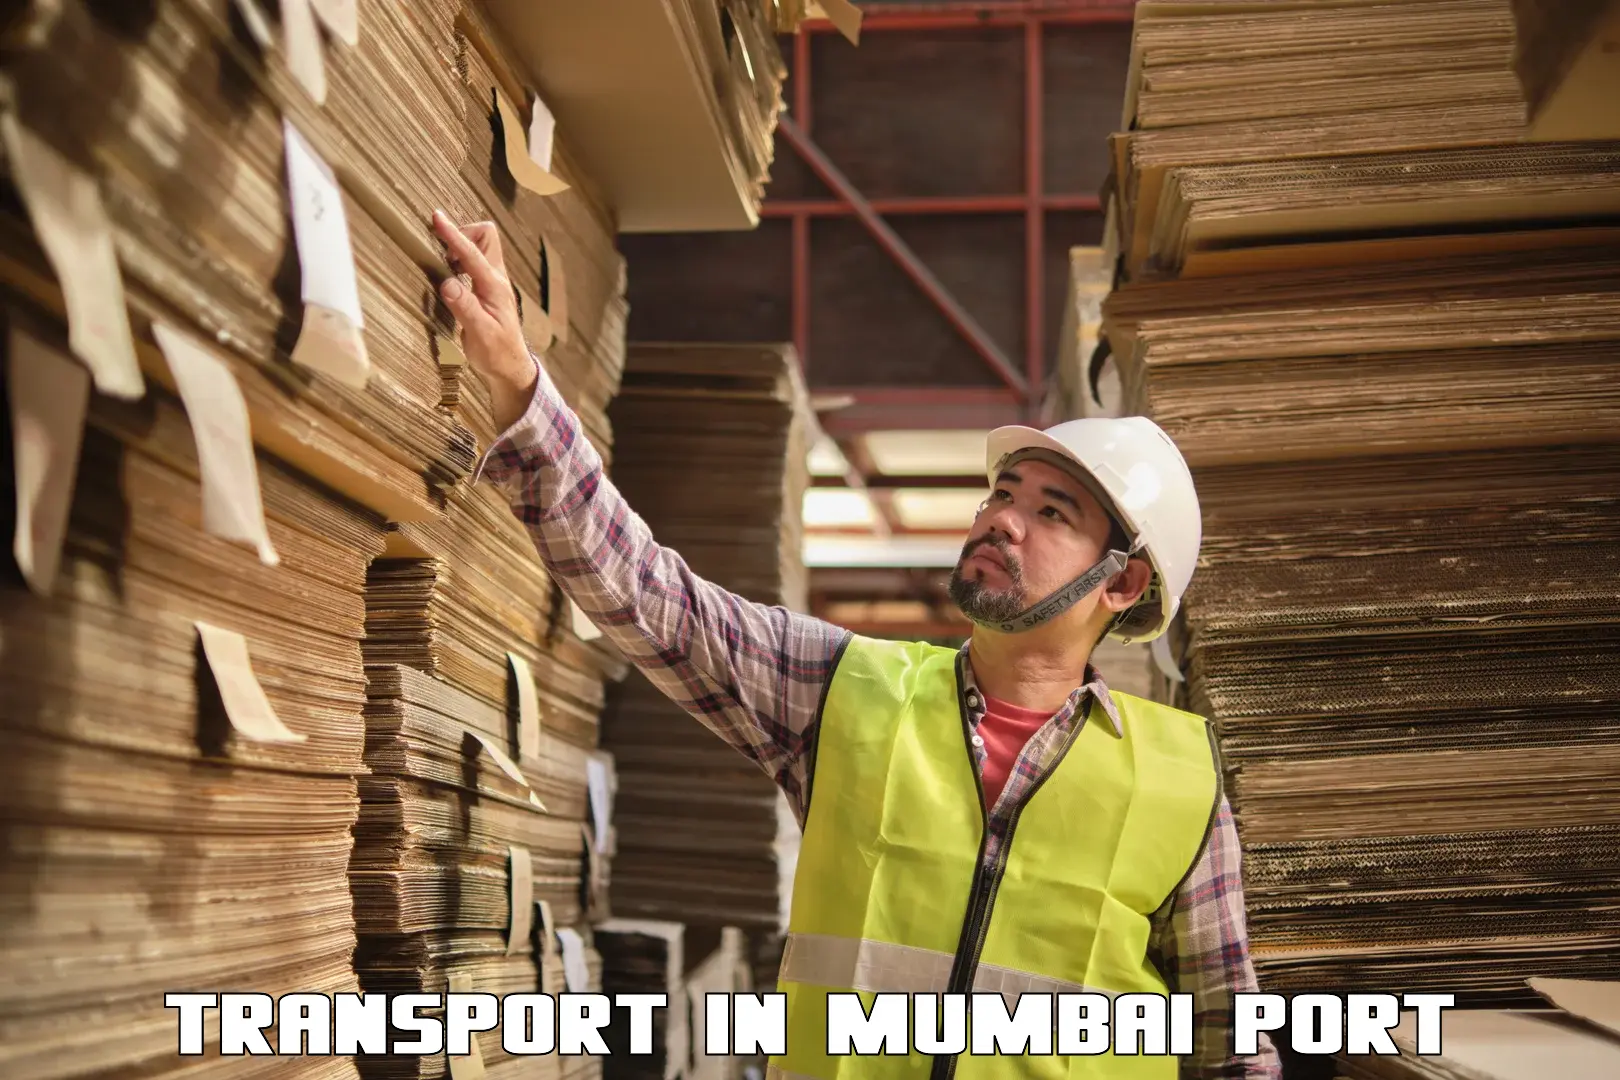 Bike transport service in Mumbai Port